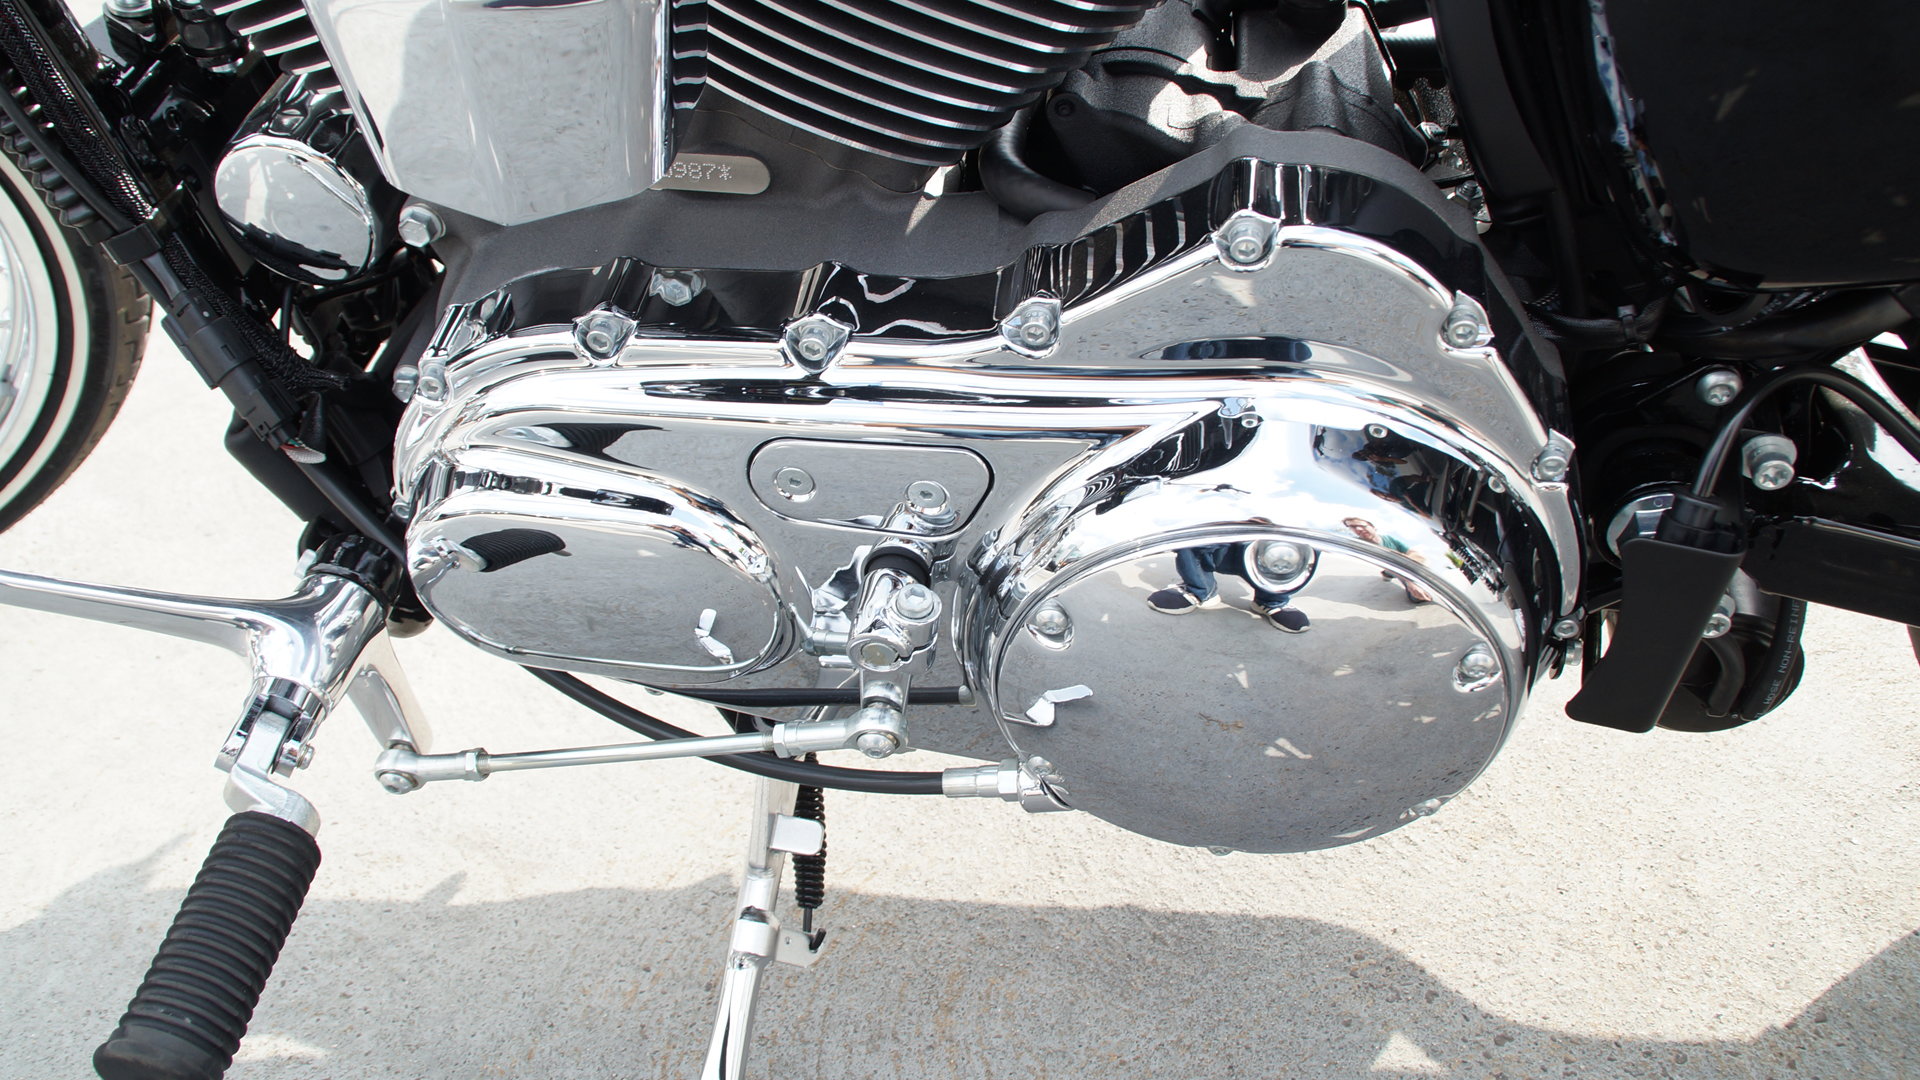 Harley Davidson Softail How To Change Transmission Fluid Hdforums